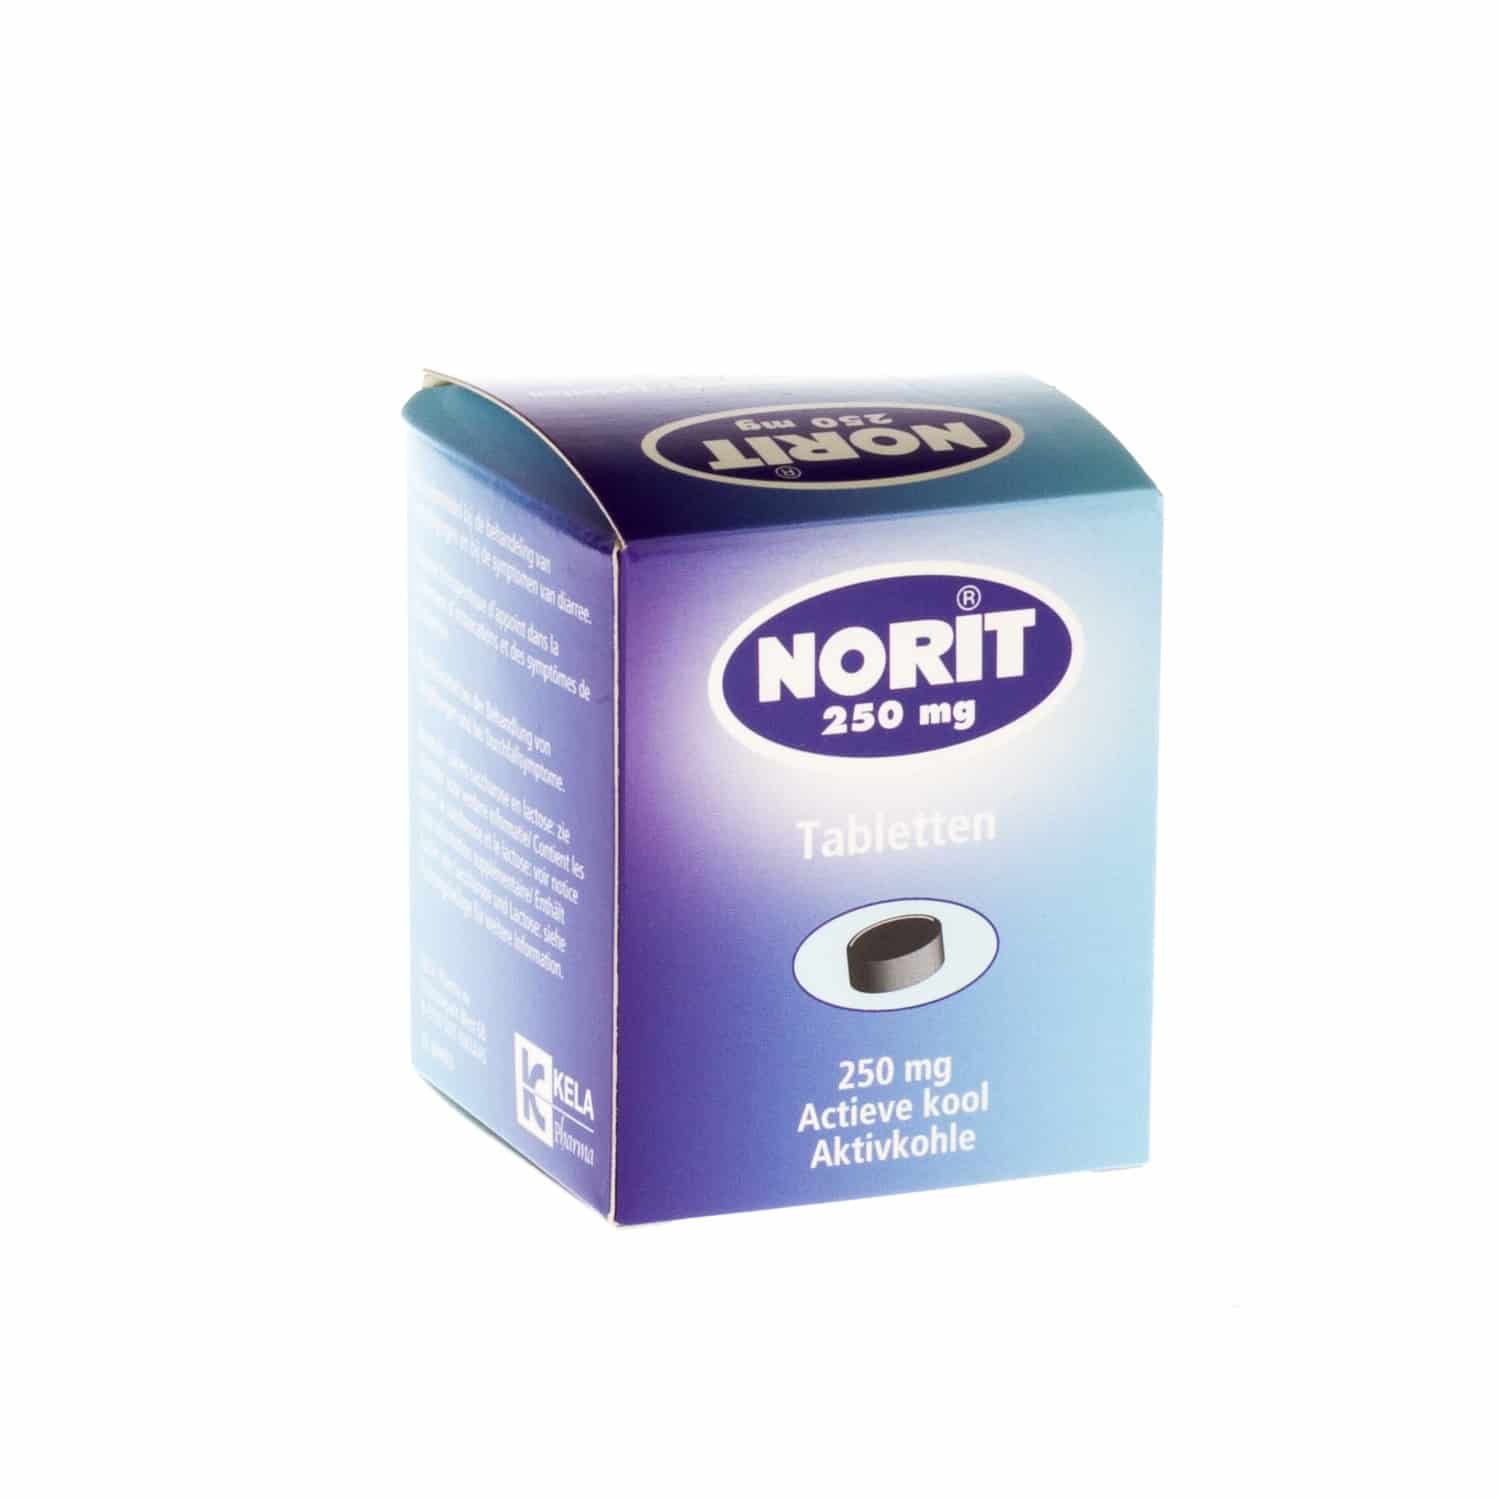 Norit 250 mg